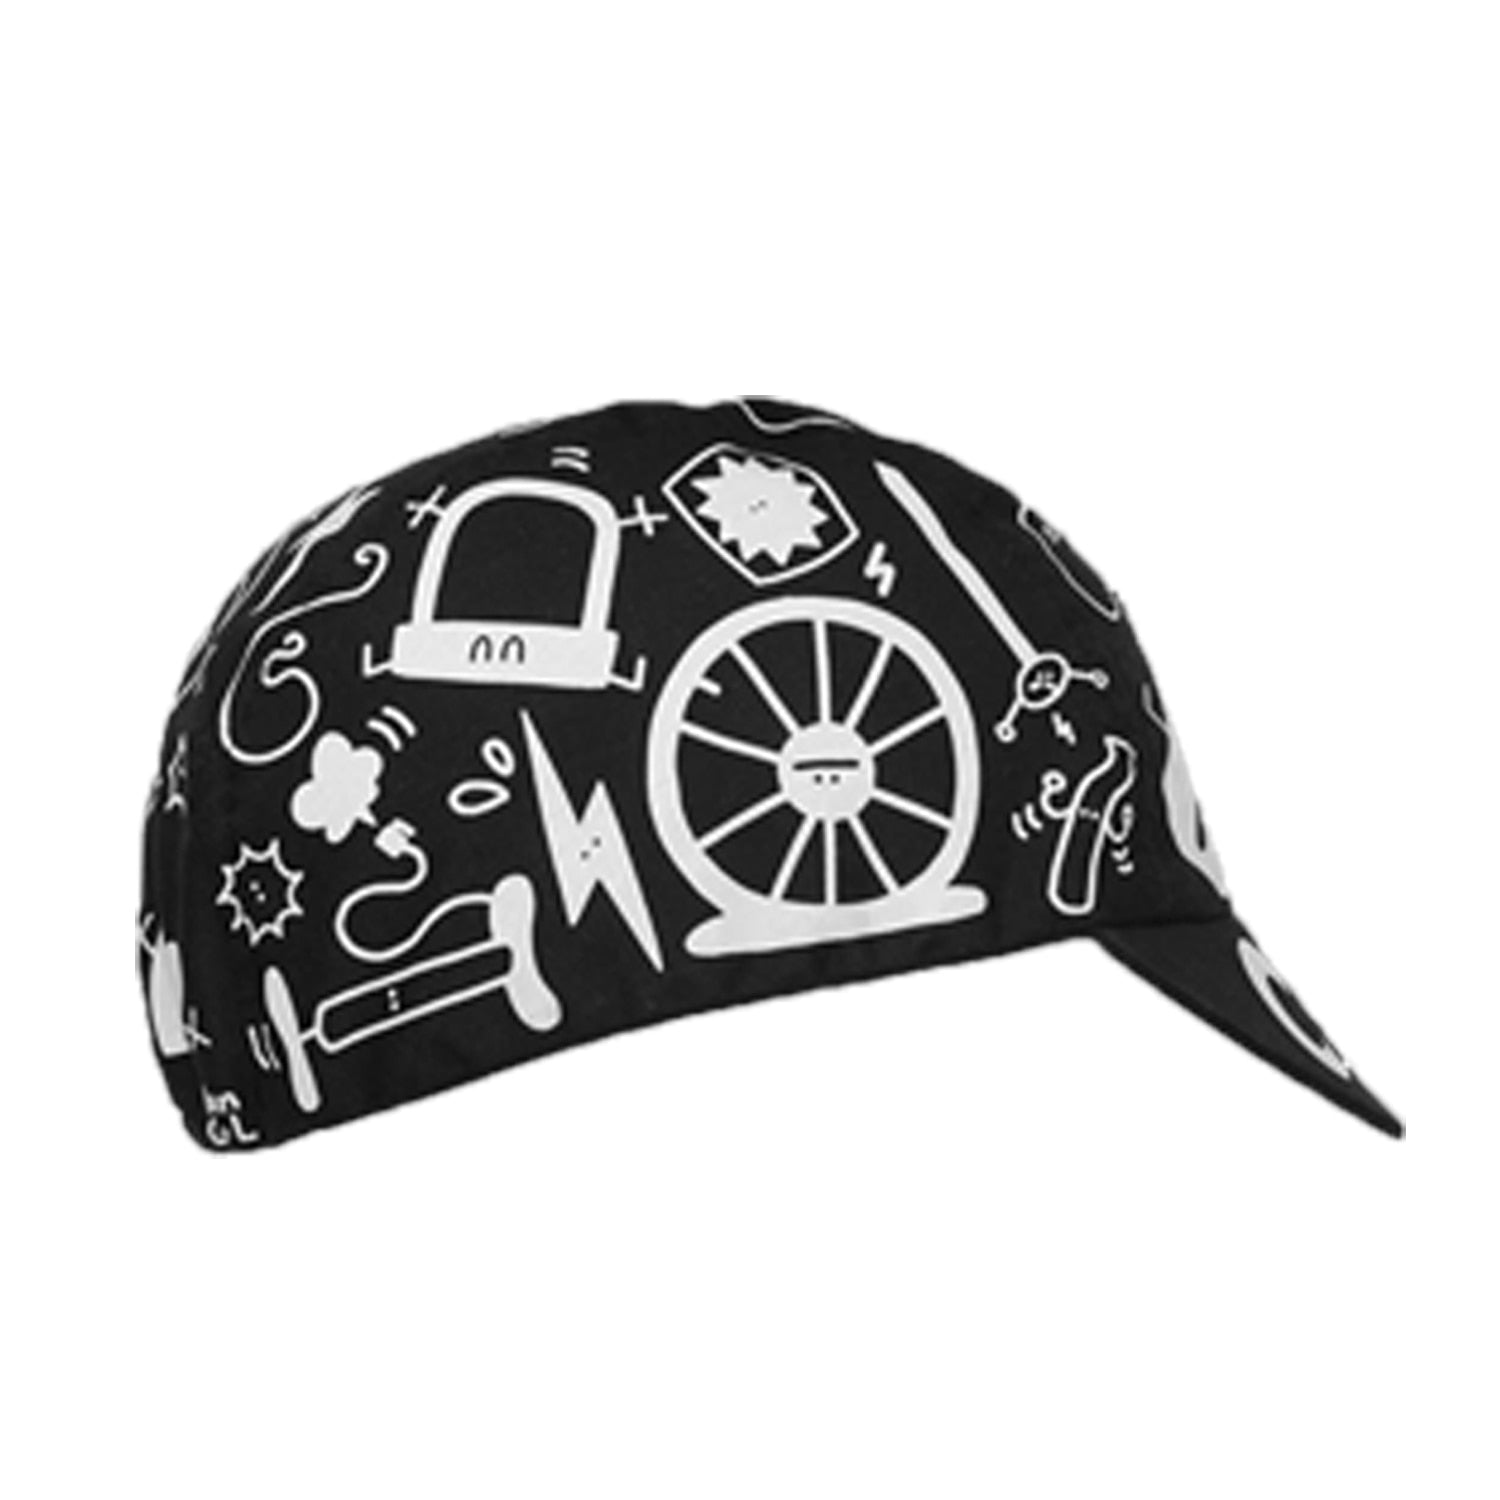 Hello Cartoon Print Black White Cycling Caps Summer Polyester Quick Drying Bicycle Balaclava Team Bike Hats Cool